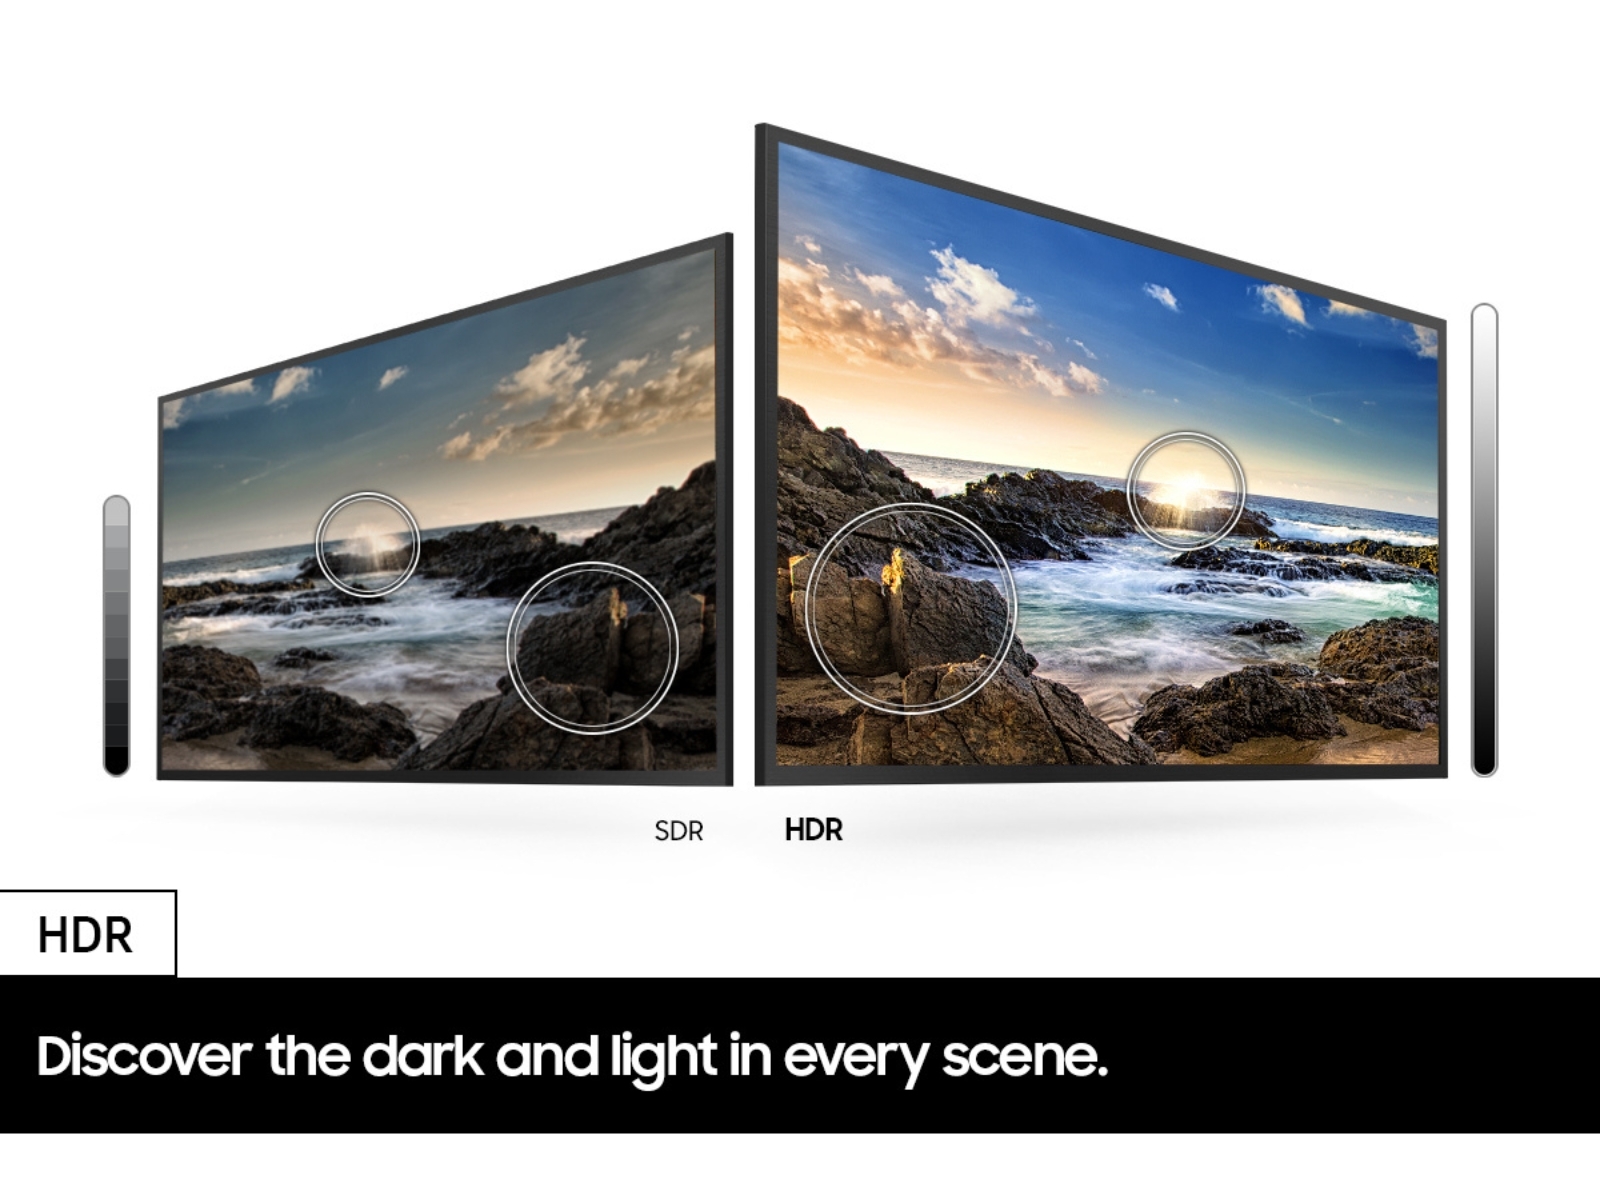 Televisor Samsung FLAT LED Smart TV 85 pulgadas Crystal UHD 4K /3,840 x  2,160 / DVB-T2 /